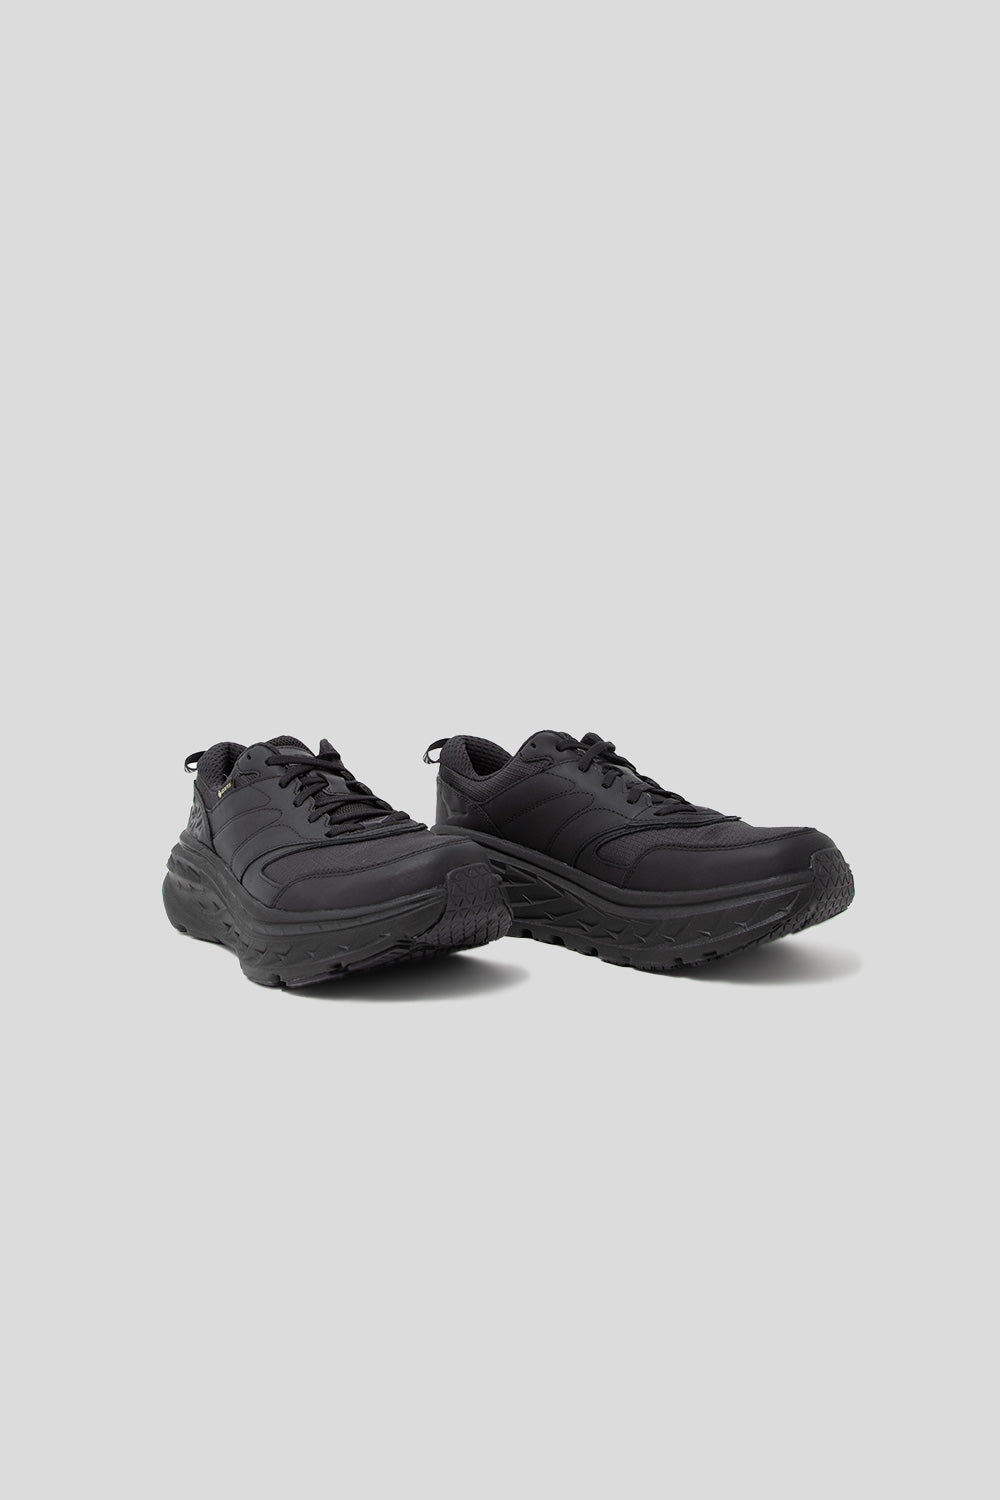 Hoka Bondi L GTX Shoe in Black / Black